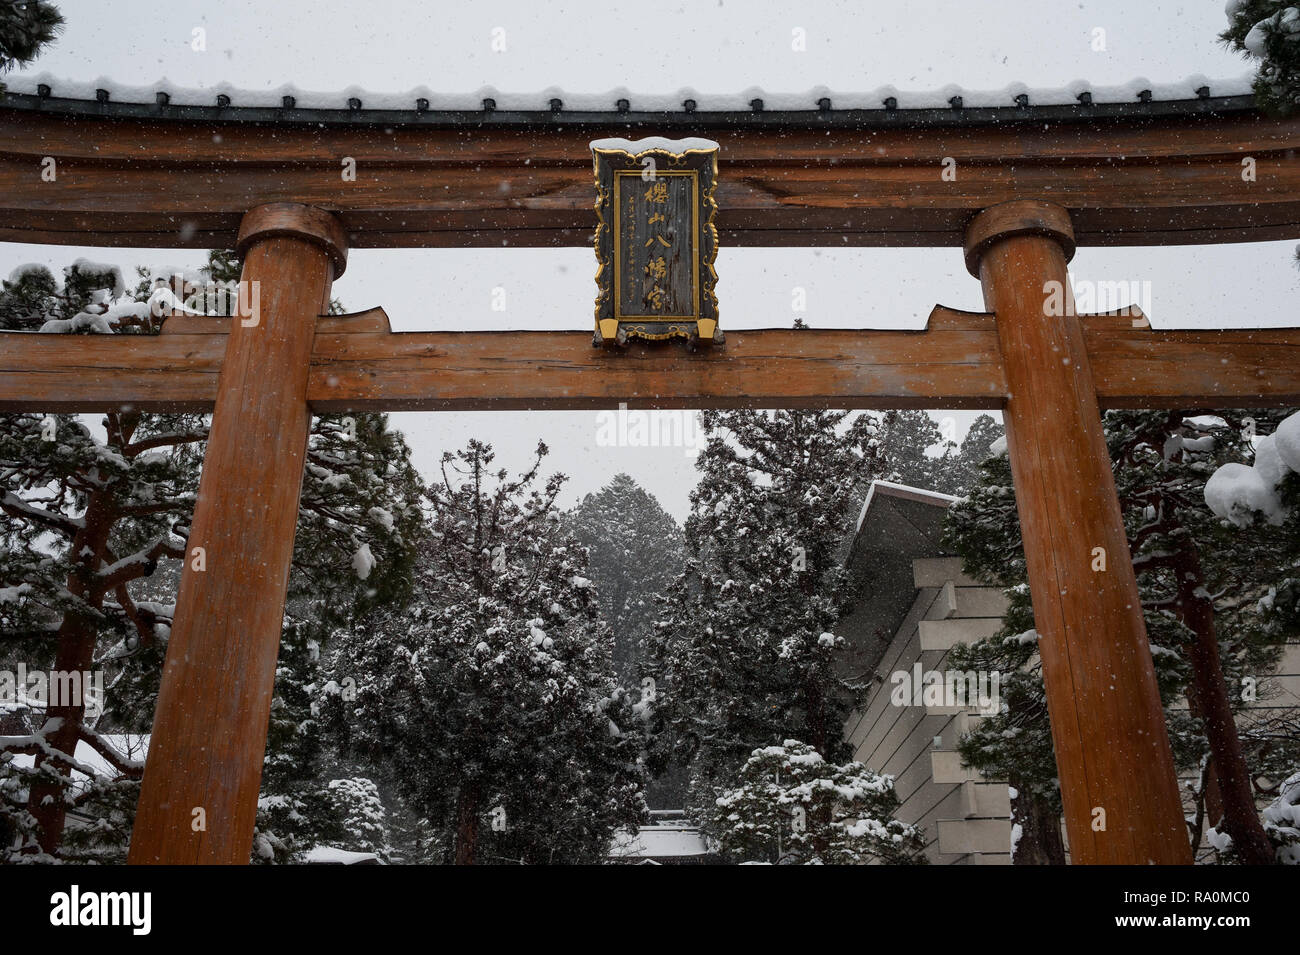 27.12.2017, Takayama, Gifu, Japan, Asien - Ein hoelzernes Torii-Portal markiert den Eingang zum Shinto-Schrein Sakurayama Hachimangu. 0SL171227D004CAR Stock Photo